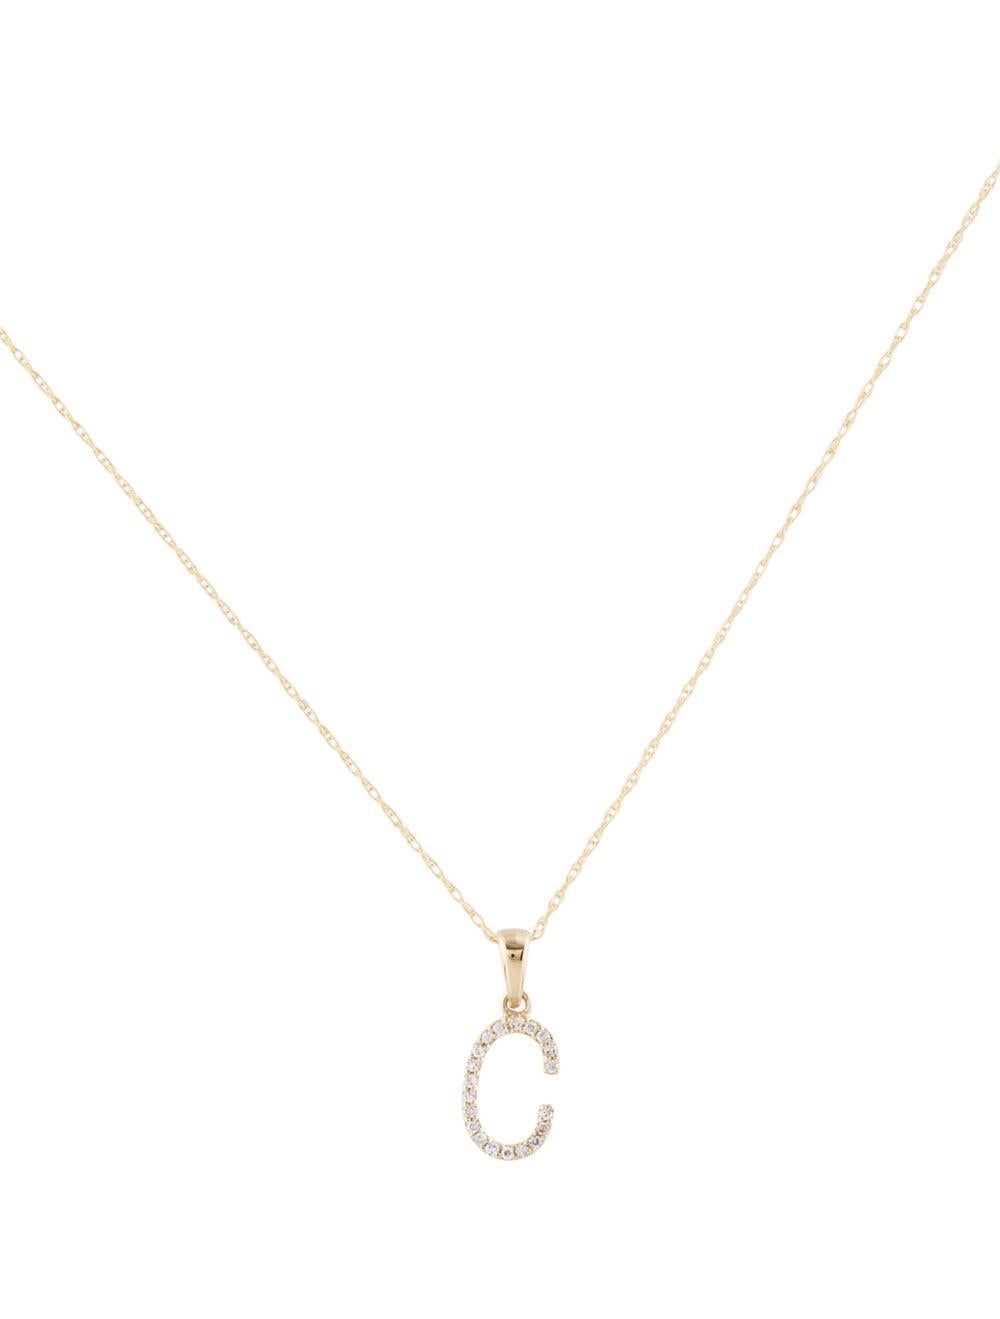 Contemporary 14 Karat Yellow Gold 0.06 Carat Diamond Initial Pendant Necklace, Initial C For Sale